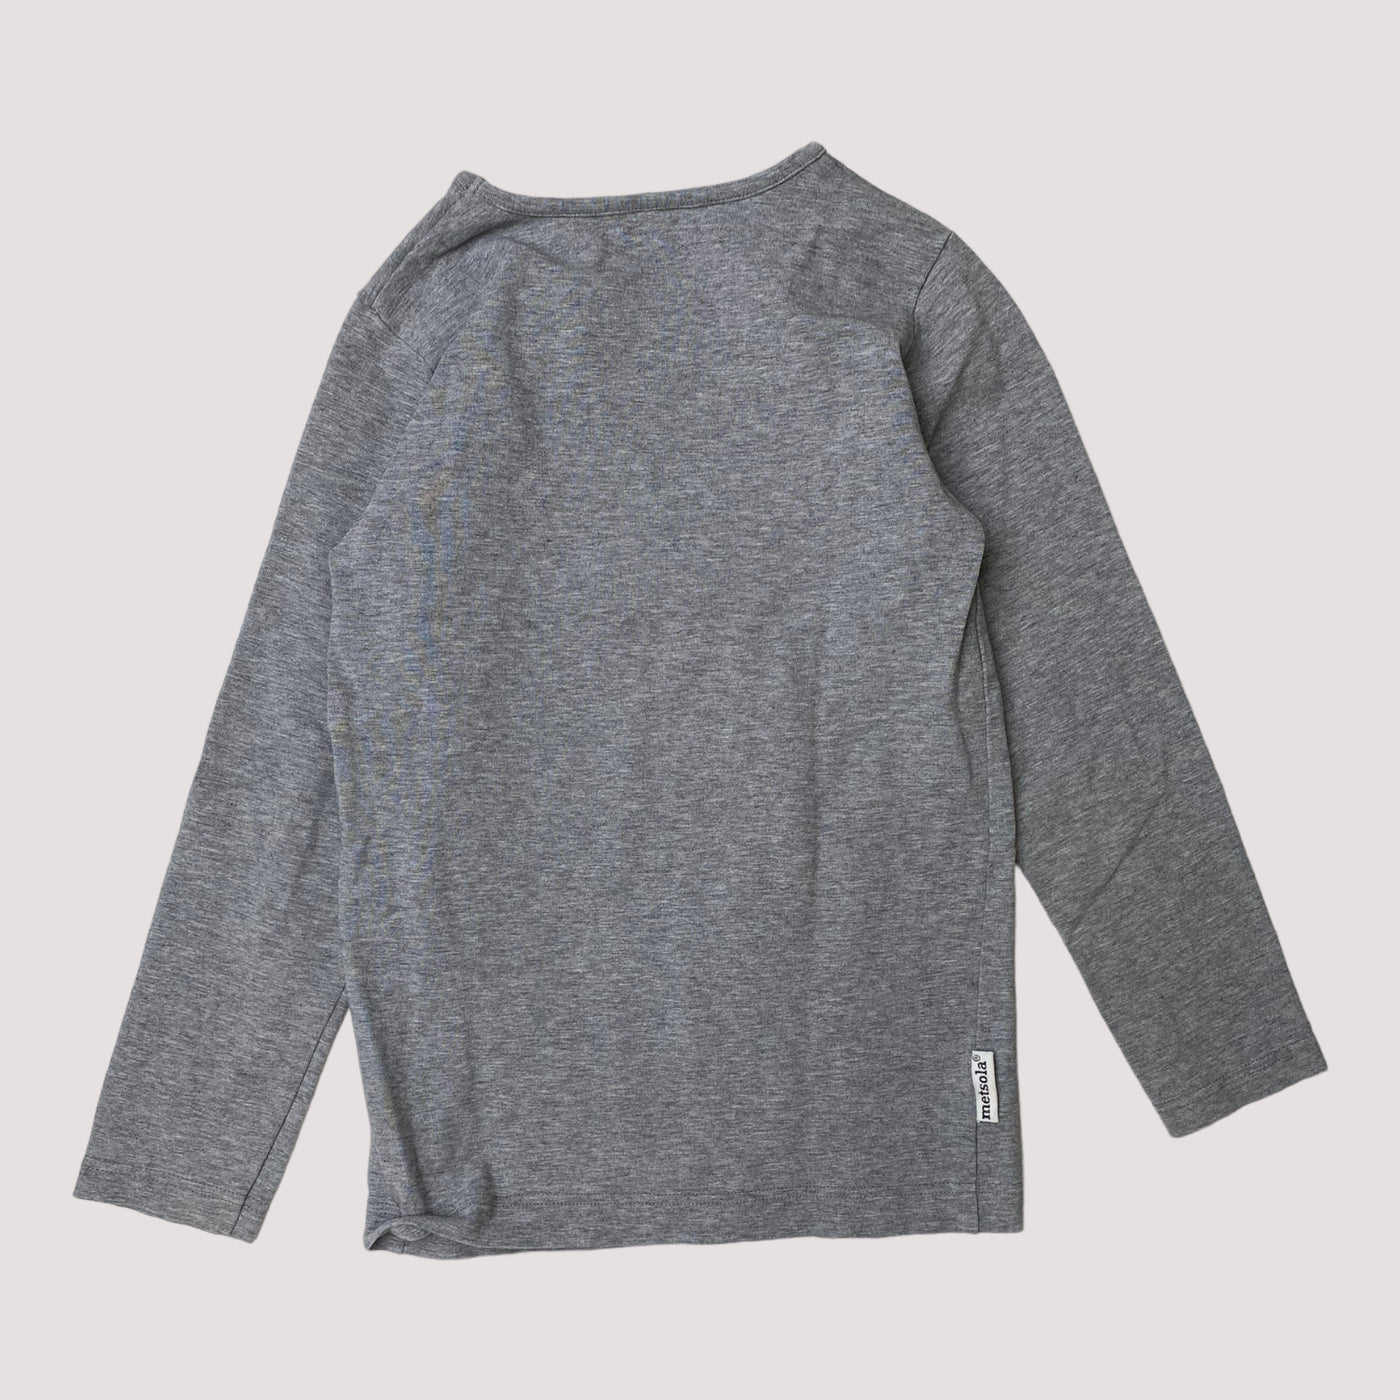 Metsola basic shirt, grey | 116cm